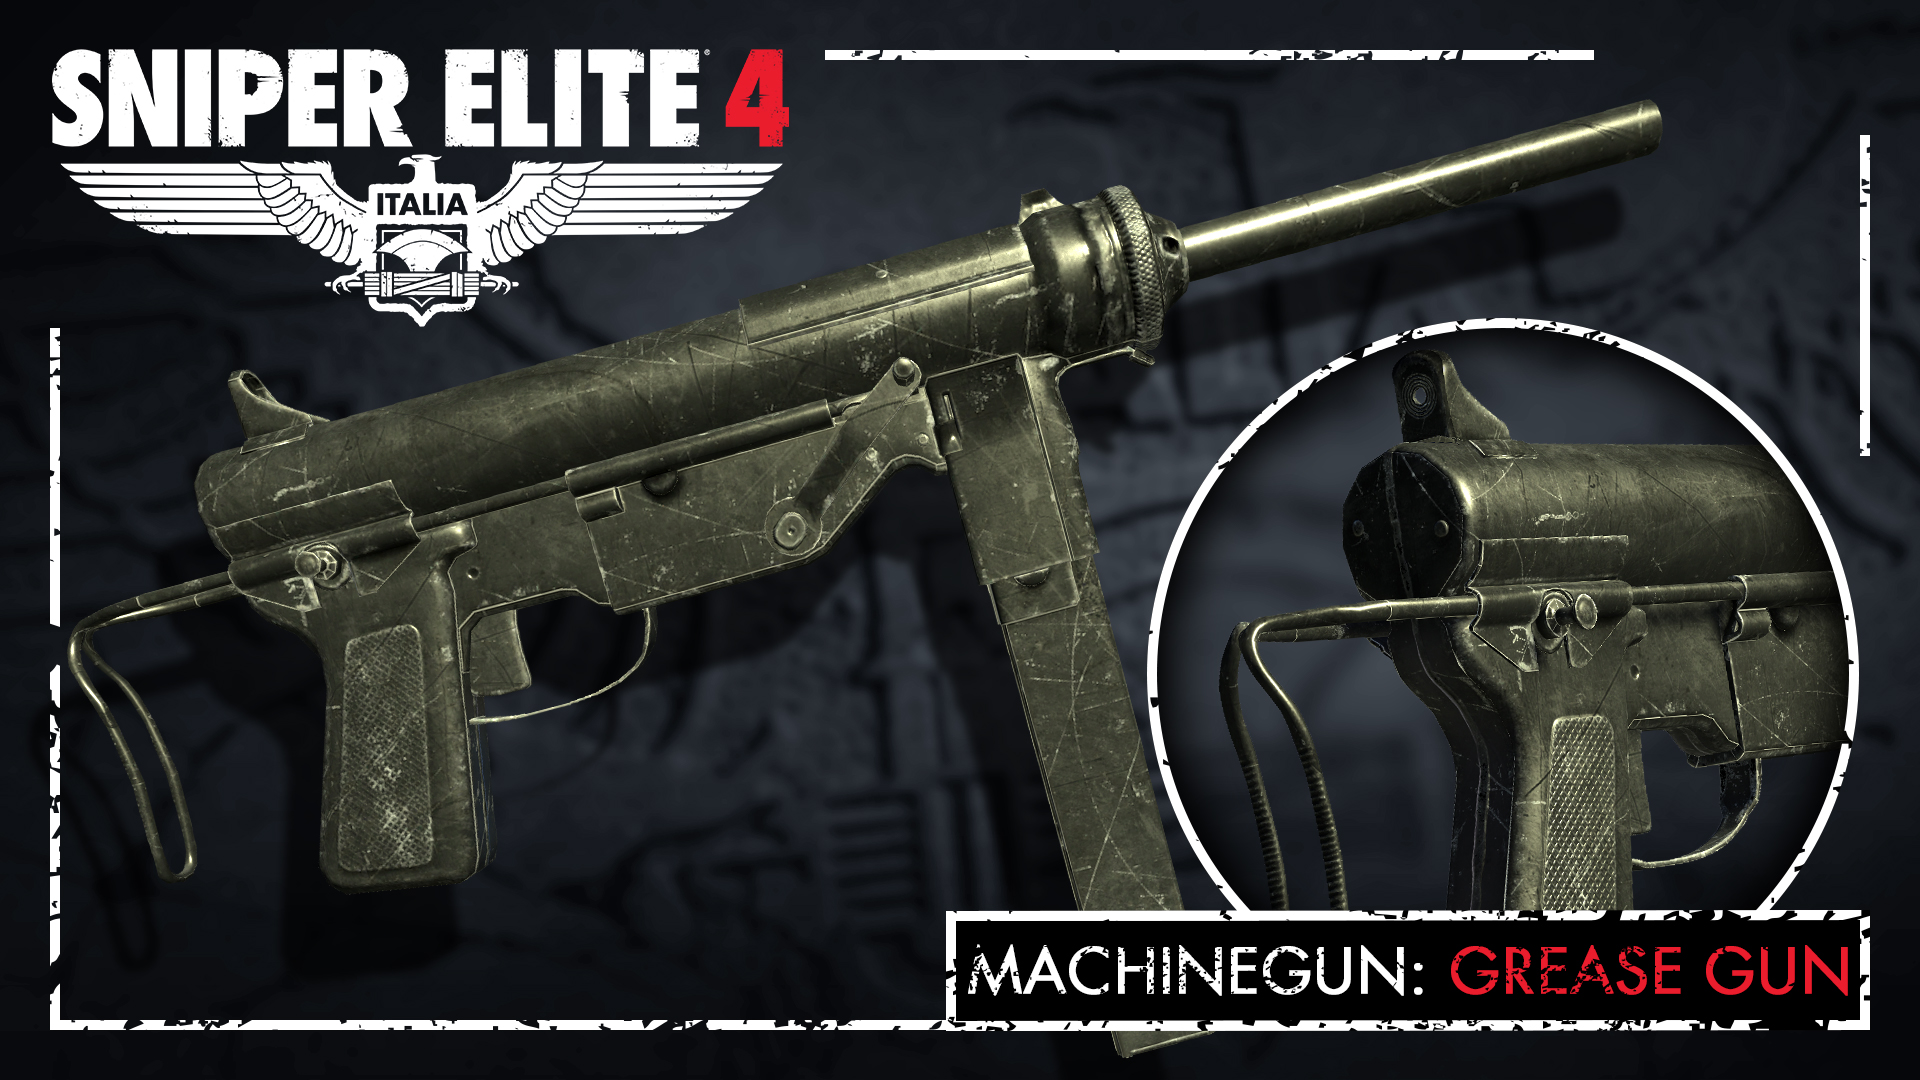 [$ 4.51] Sniper Elite 4 - Silent Warfare Weapons Pack DLC Steam CD Key